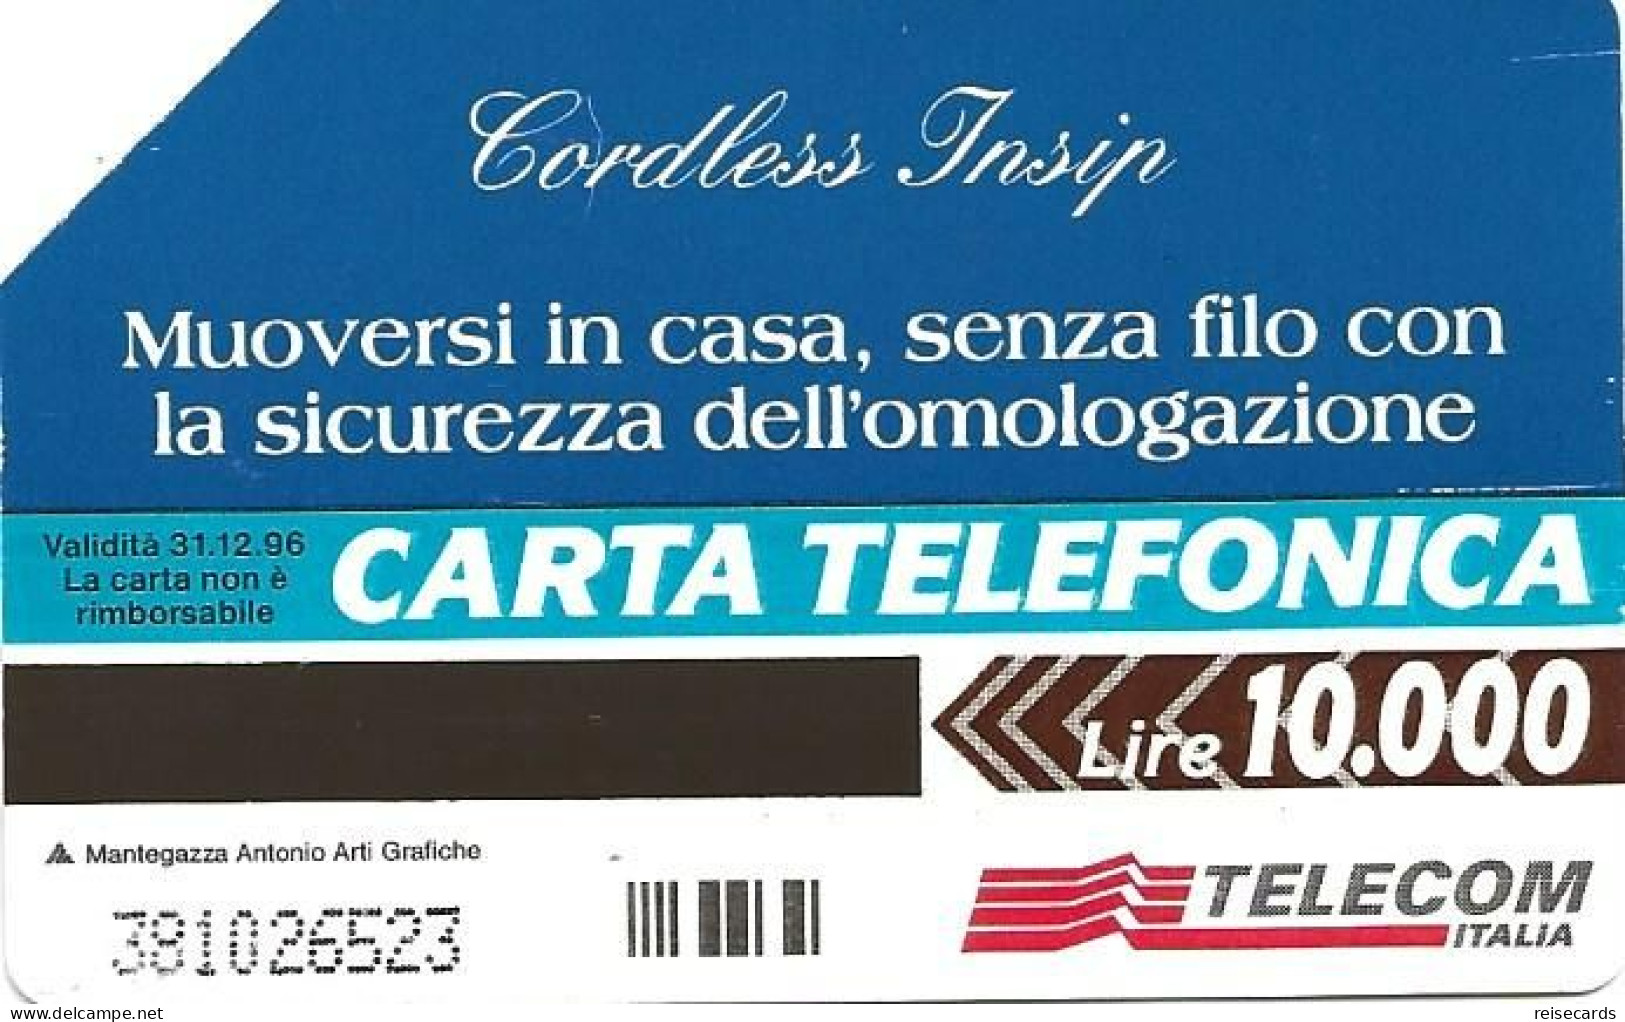 Italy: Telecom Italia - Cordless Insip - Publiques Publicitaires